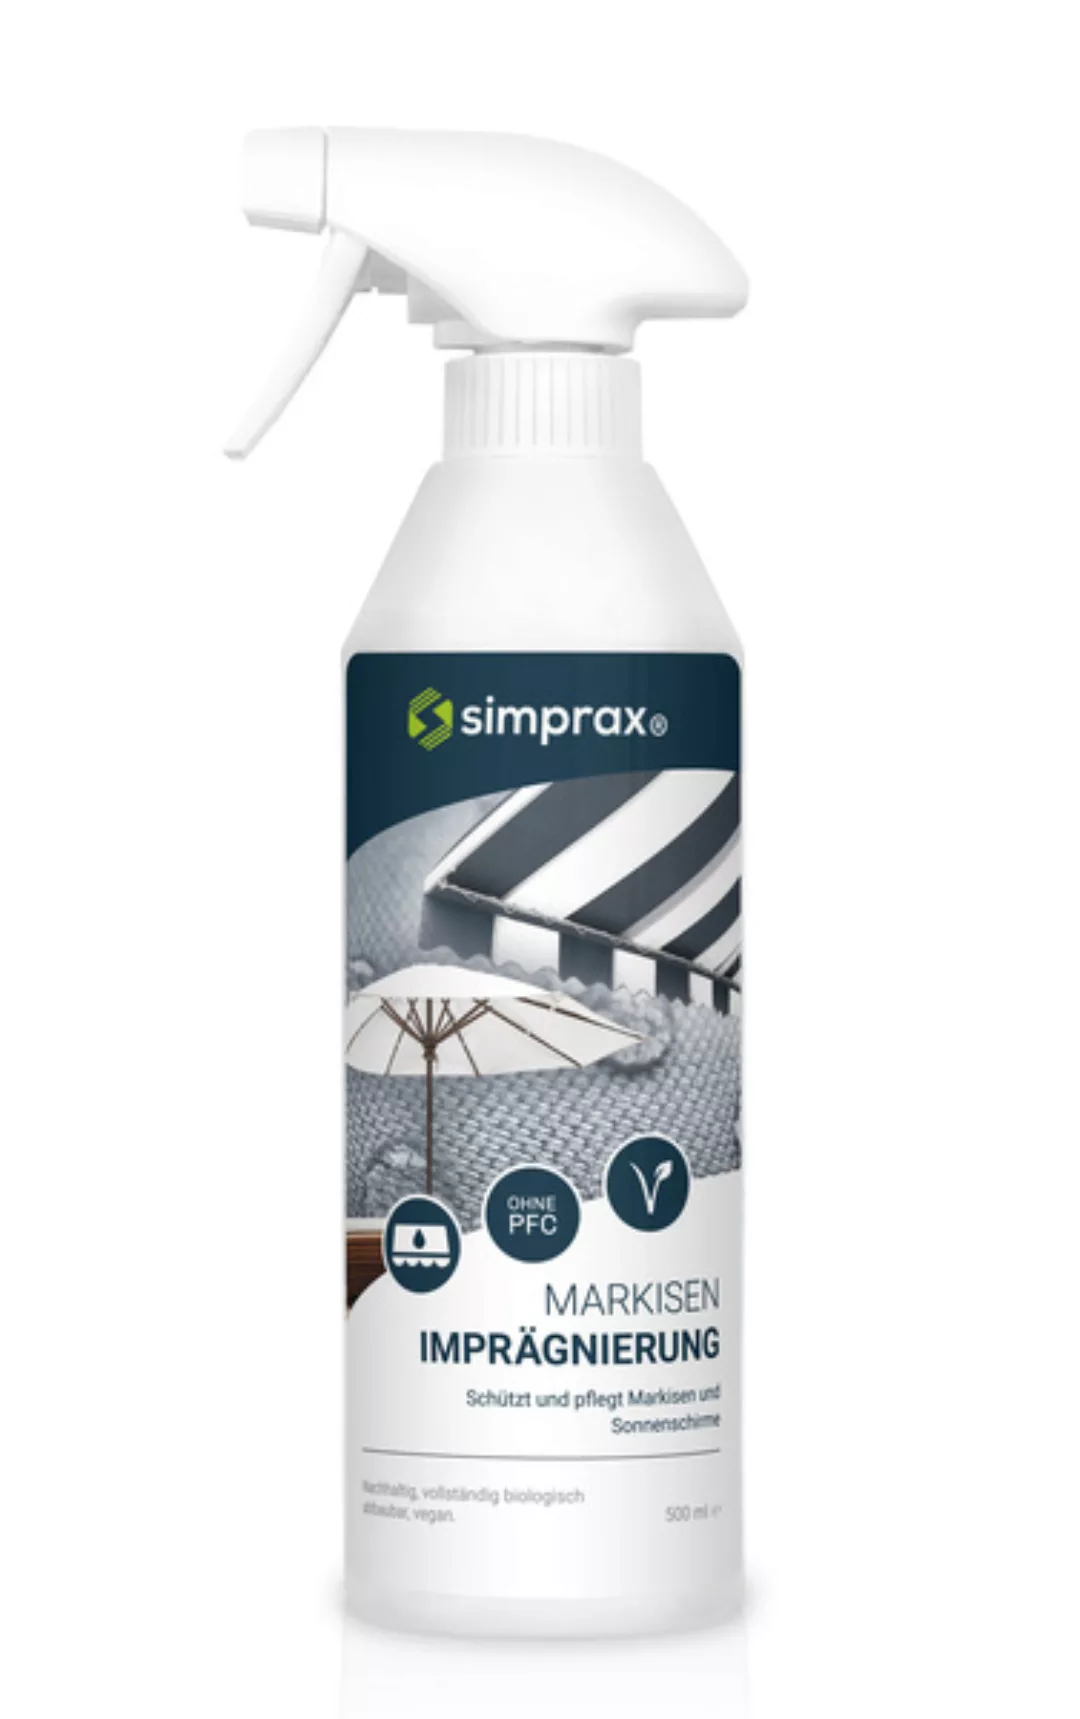 Simprax® Markisen Imprägnierung - Anti-grünbelag - Uv-stabil - 500ml günstig online kaufen